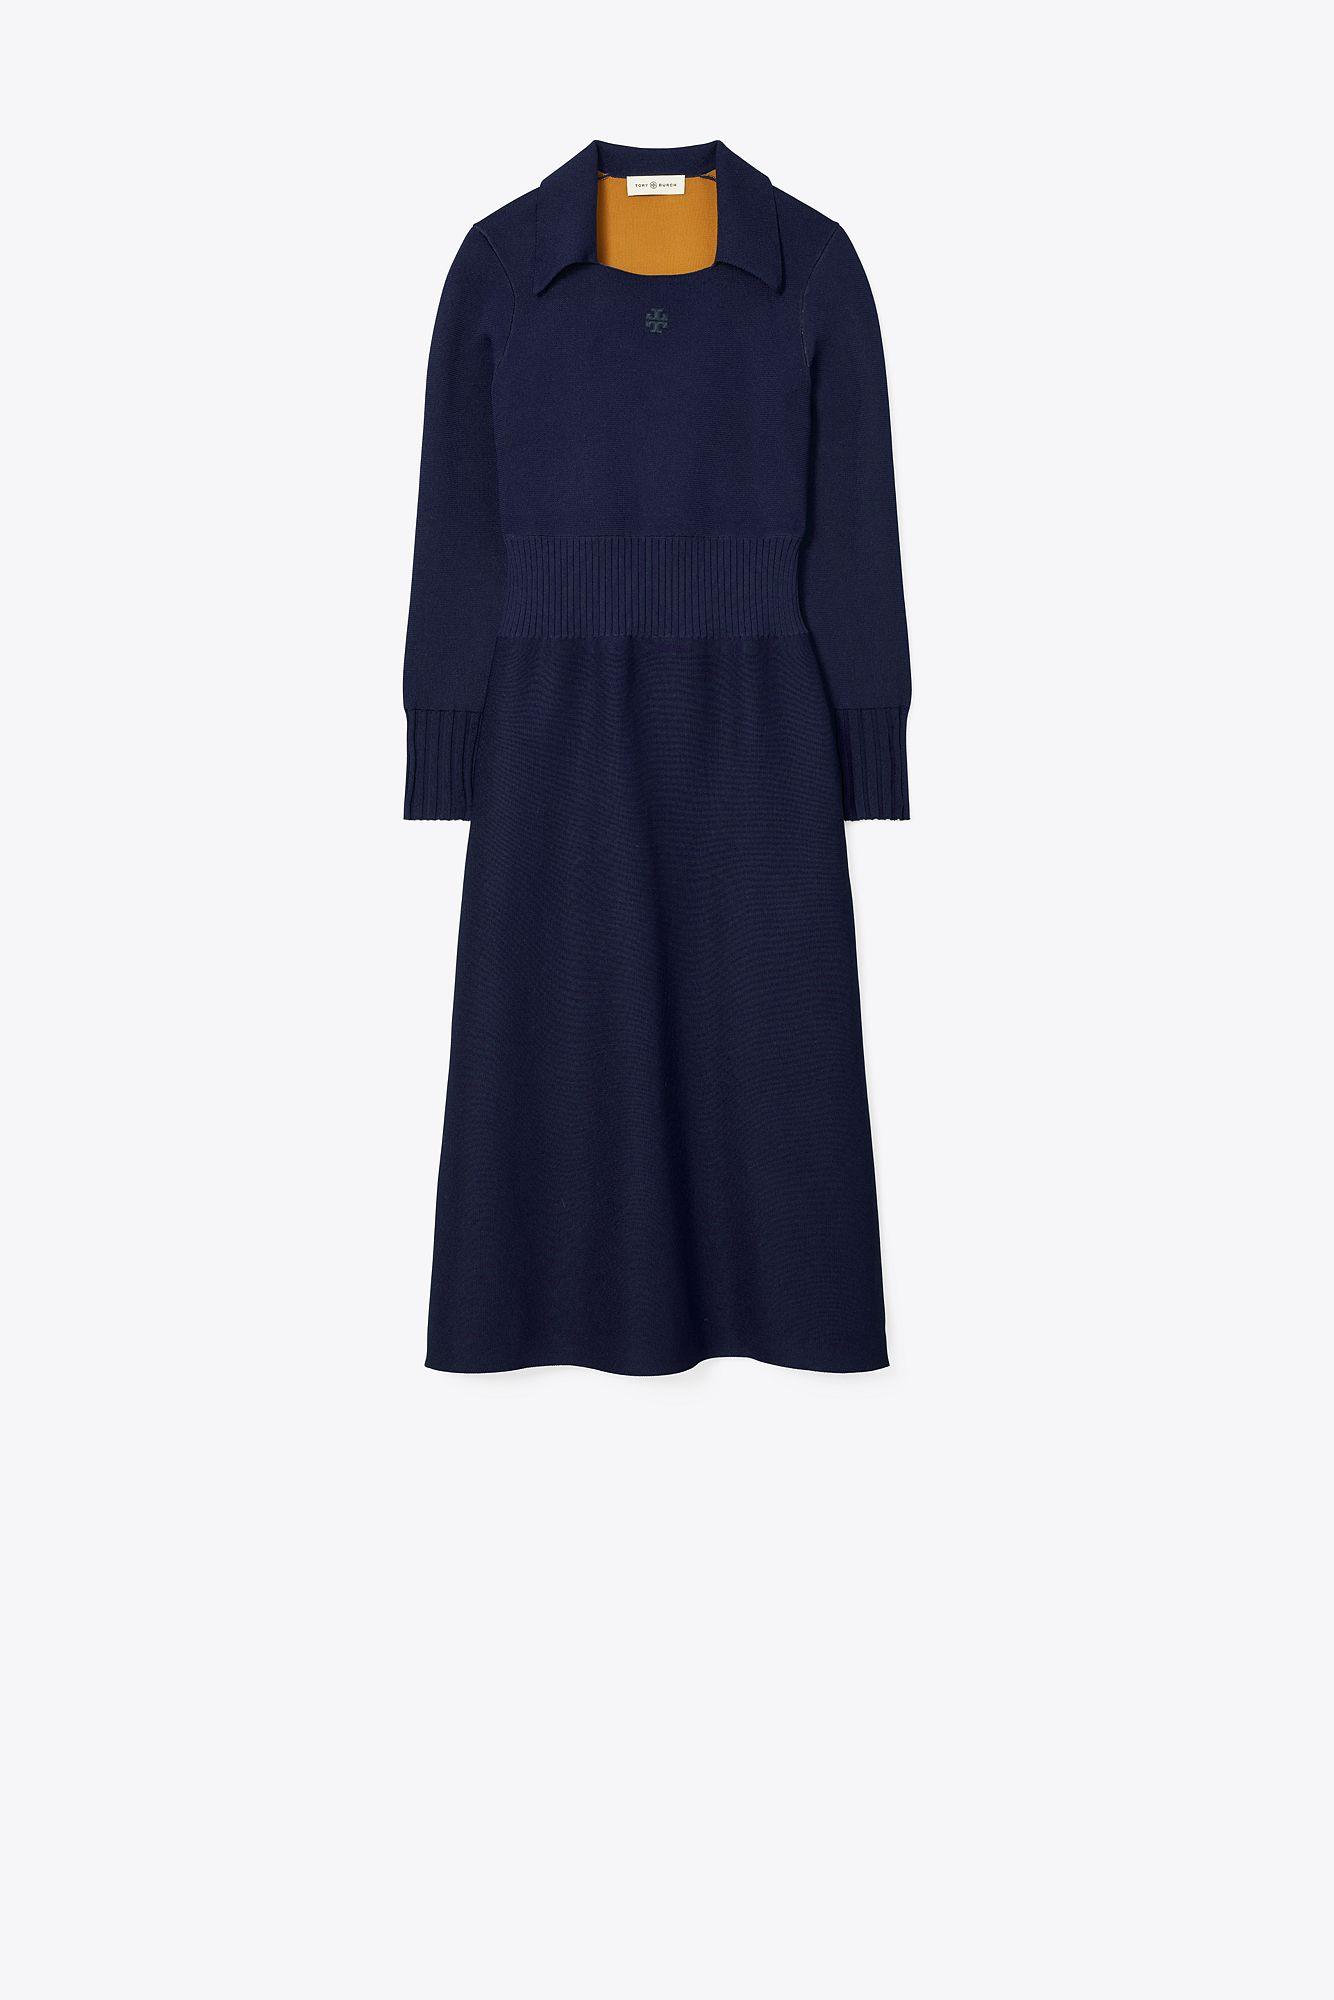 Tory Burch Logo Knit Polo Dress in Blue | Lyst